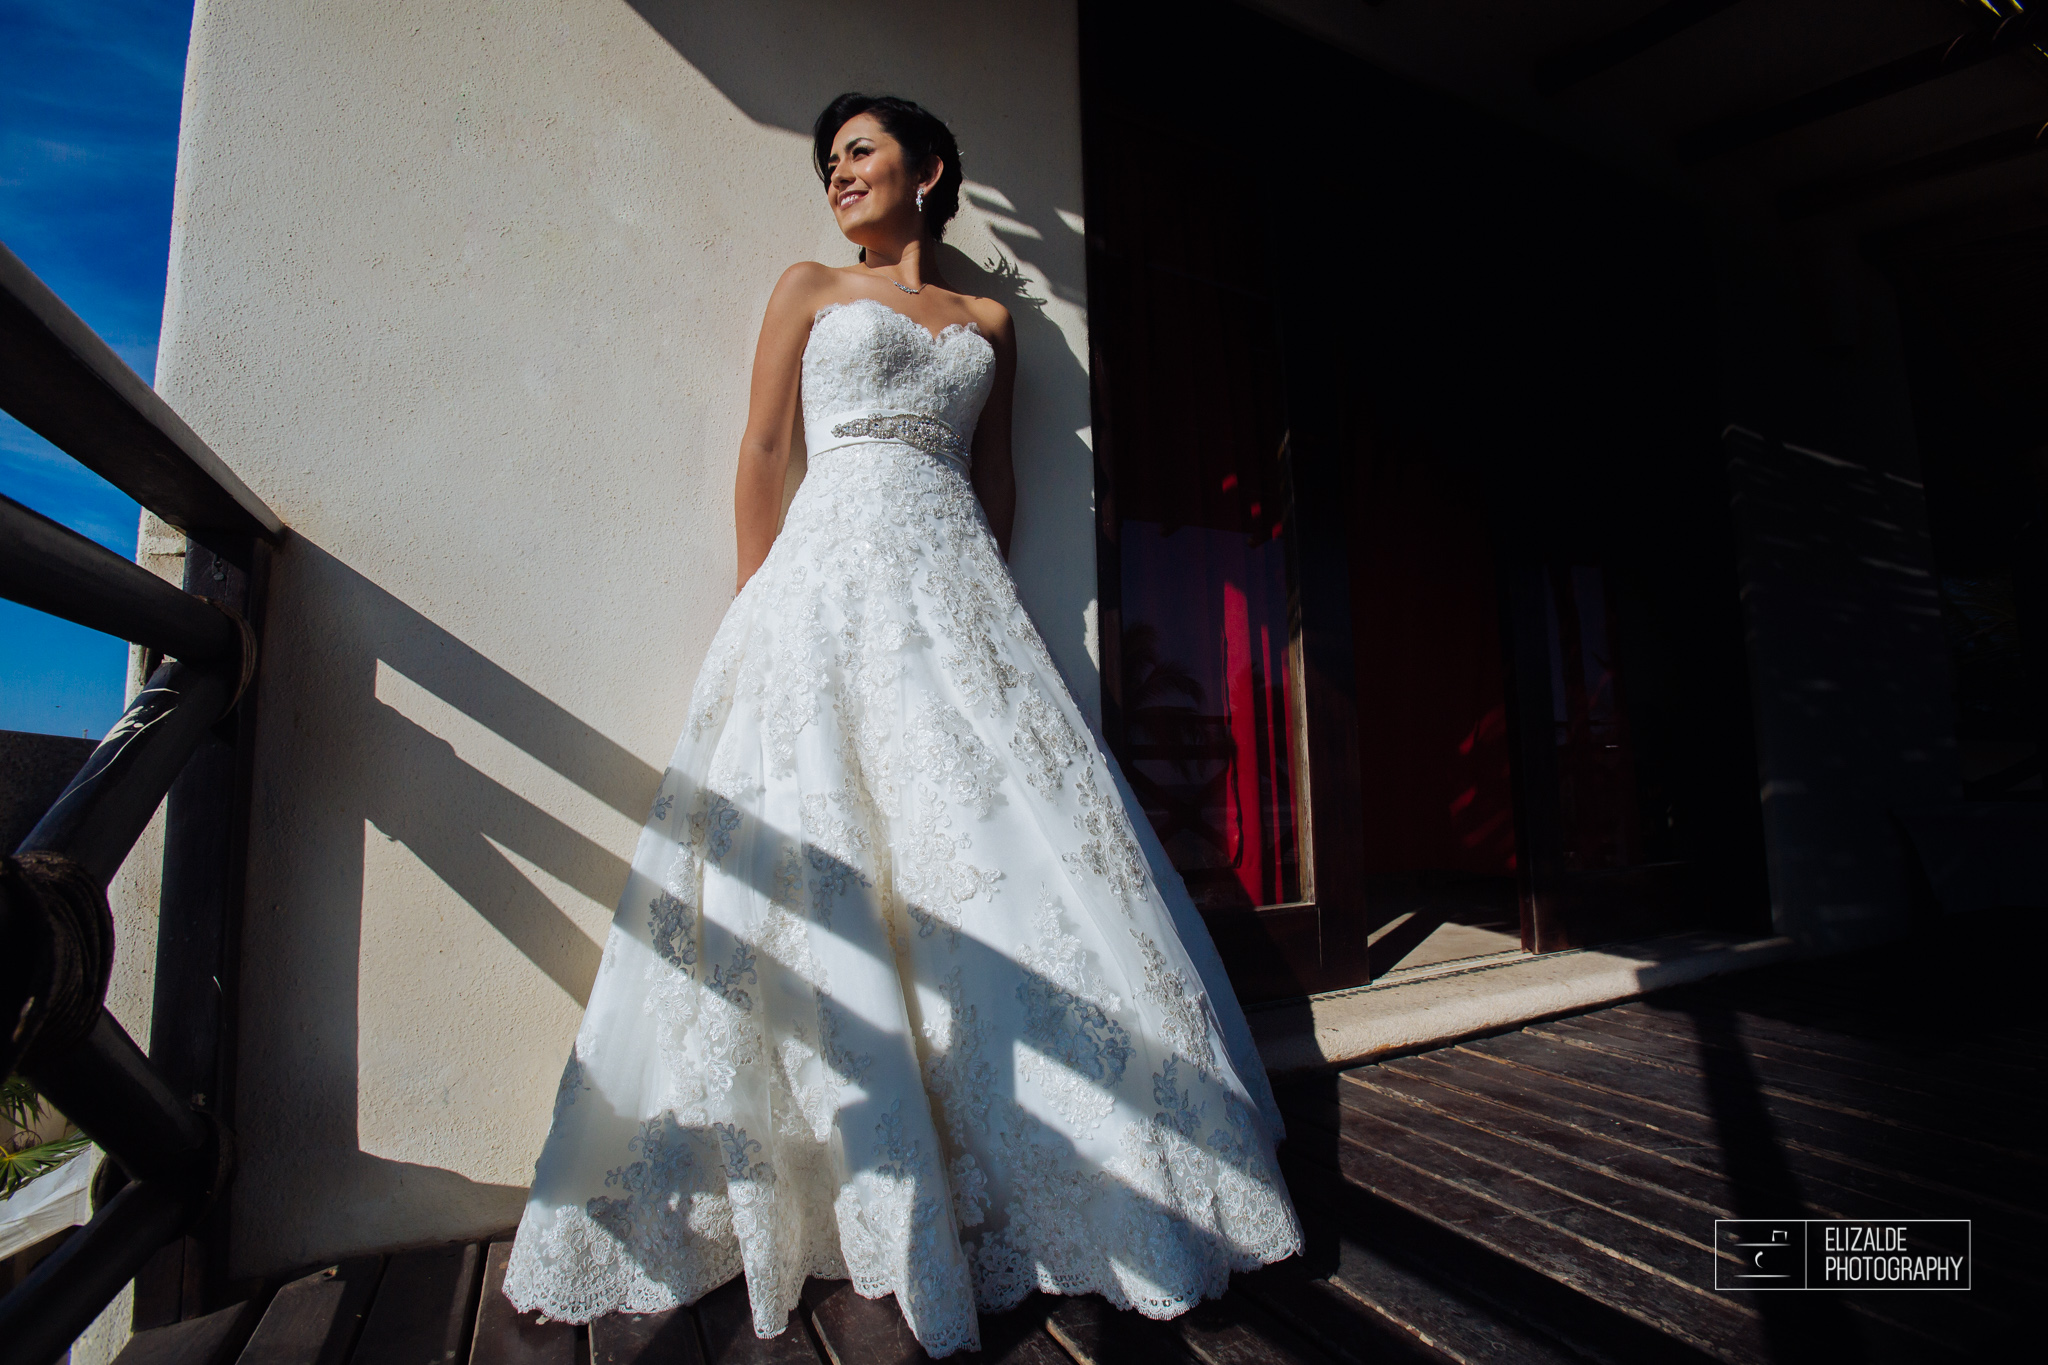 Pay and Ferran_Acapulco_Destination Wedding_Elizalde Photography-46.jpg